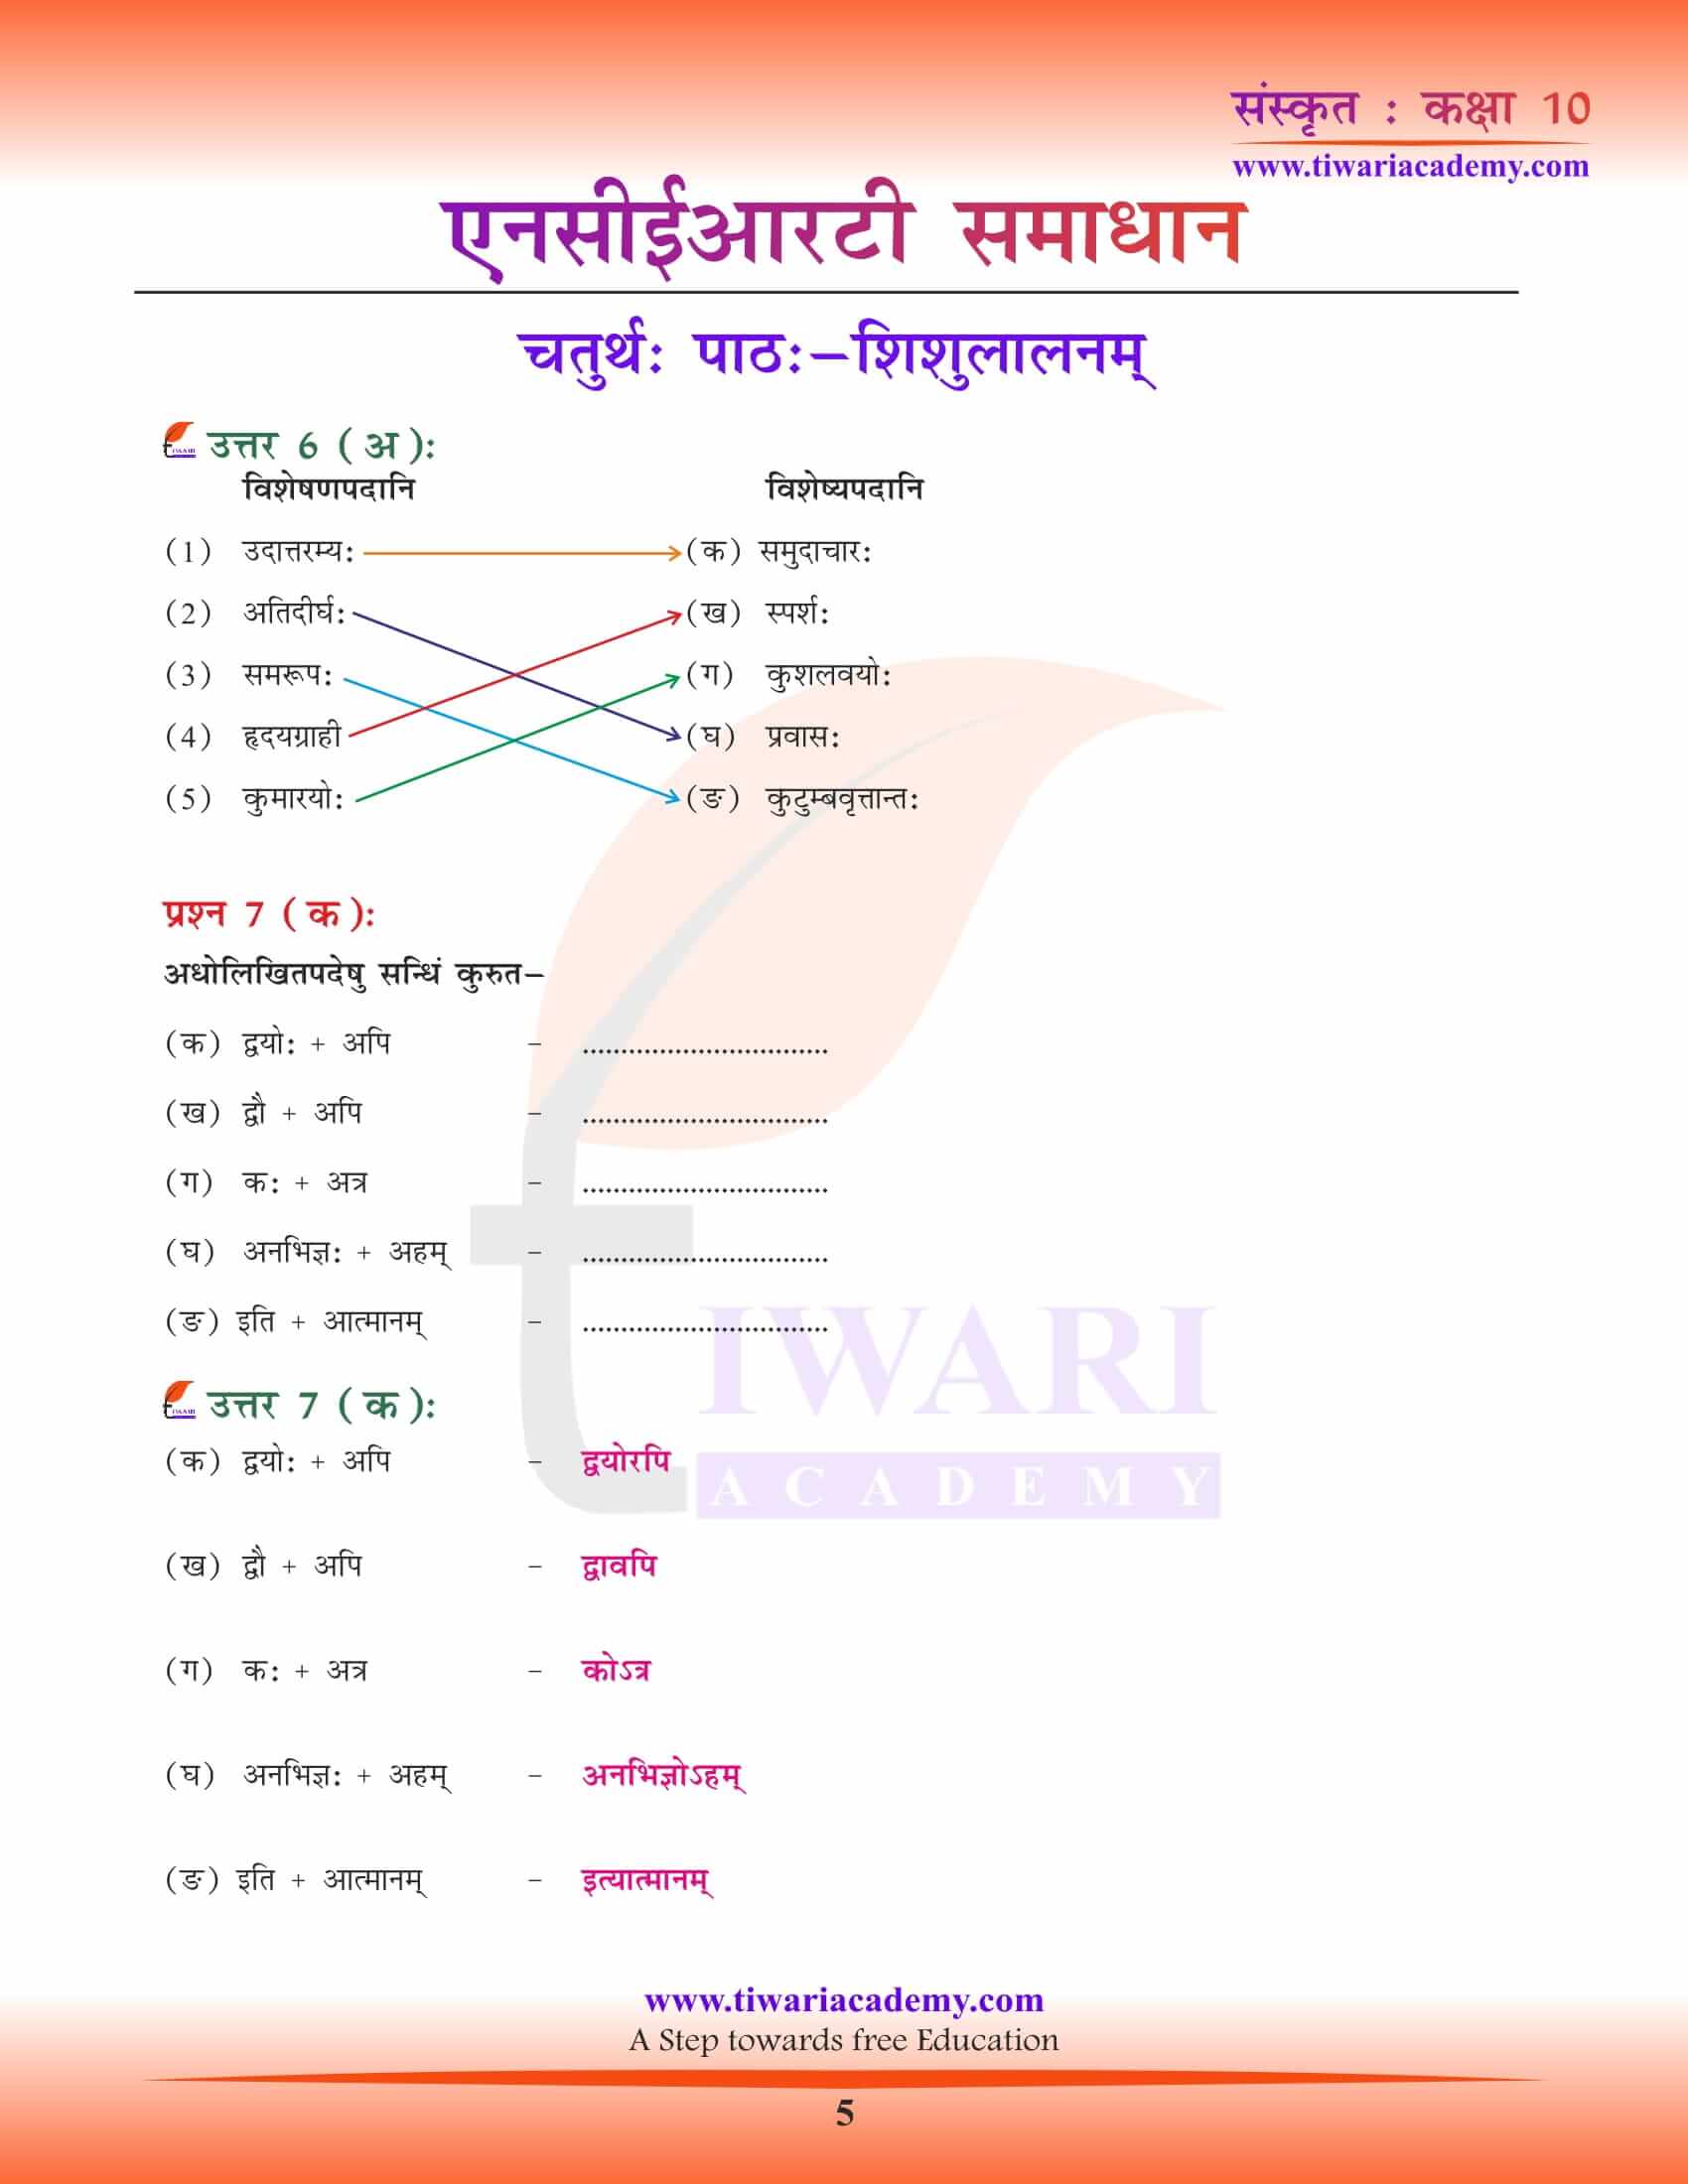 NCERT Solutions for Class 10 Sanskrit Chapter 4 in Hindi